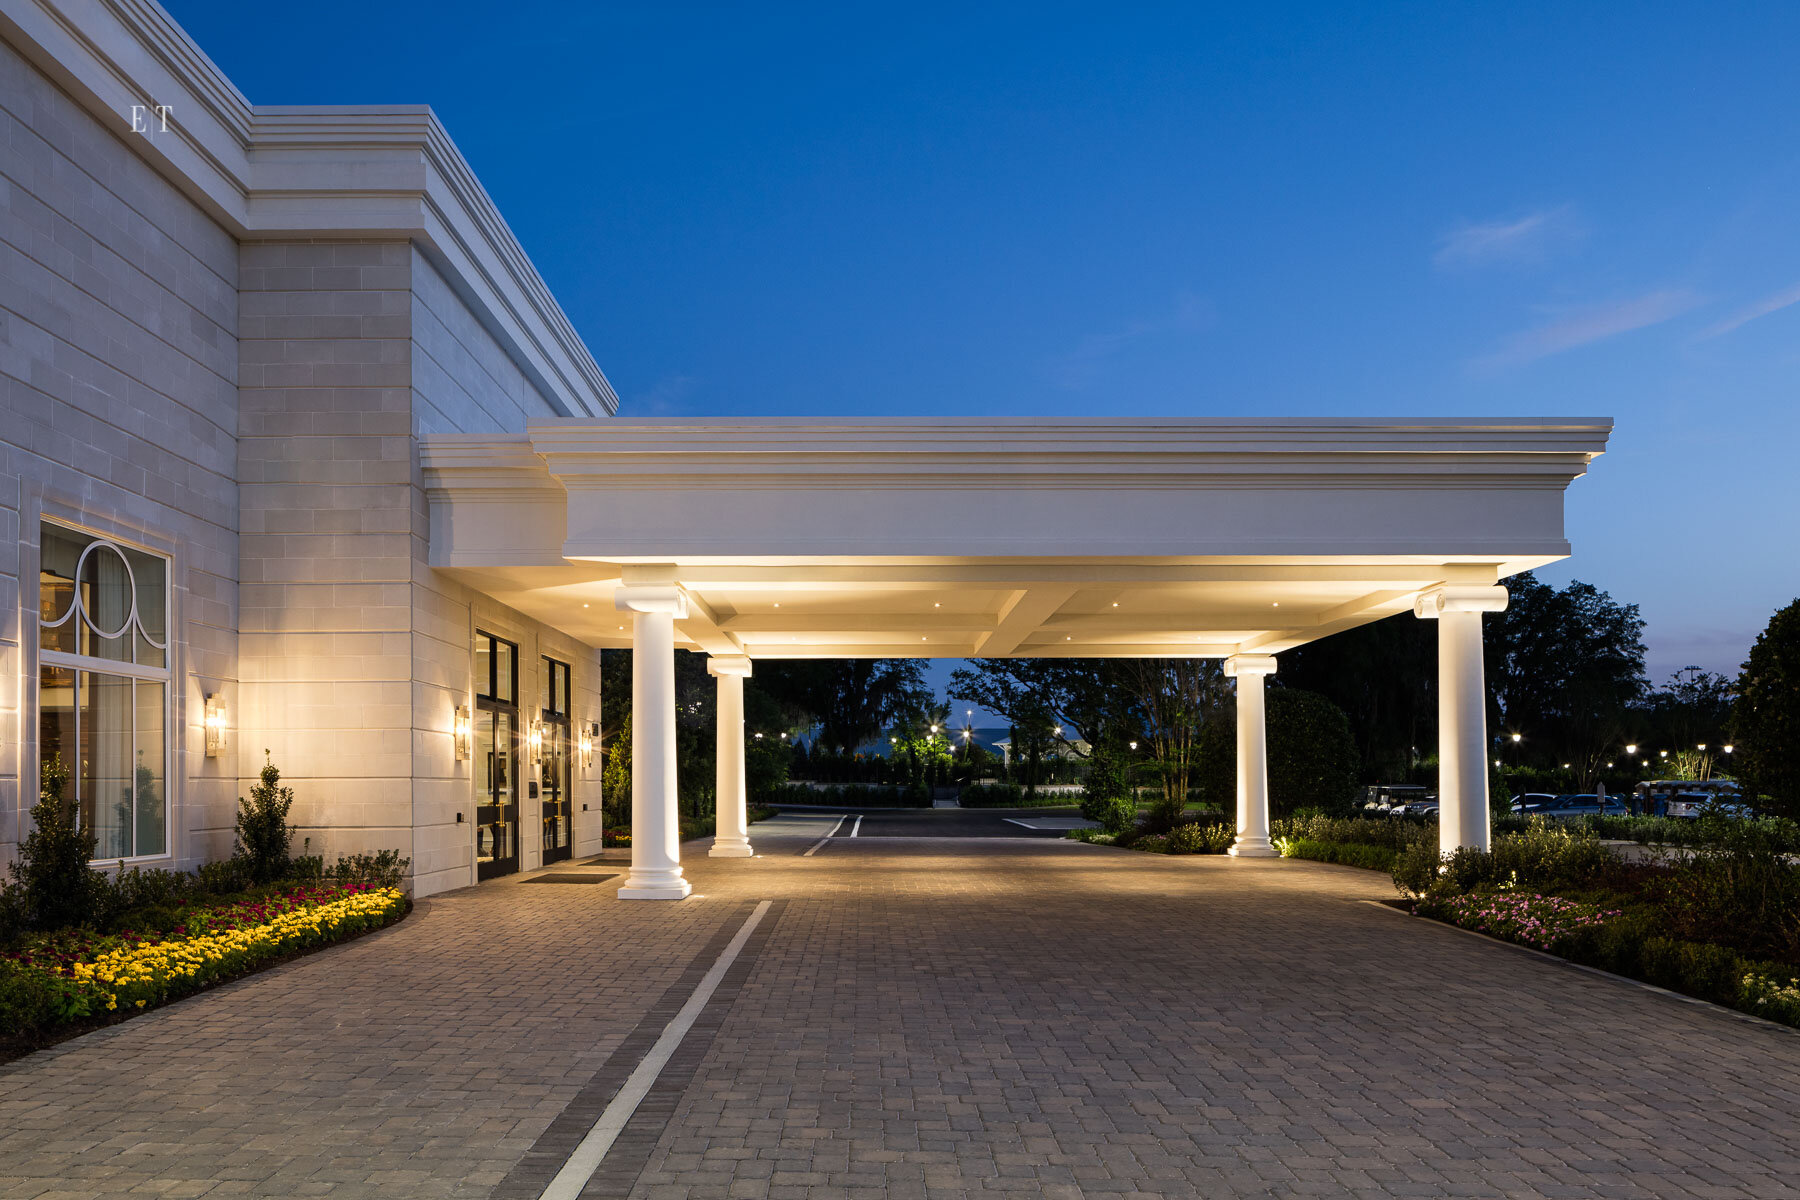  The Equestrian Hotel | World Equestrian Center | Ocala Florida - Porte Cochere  